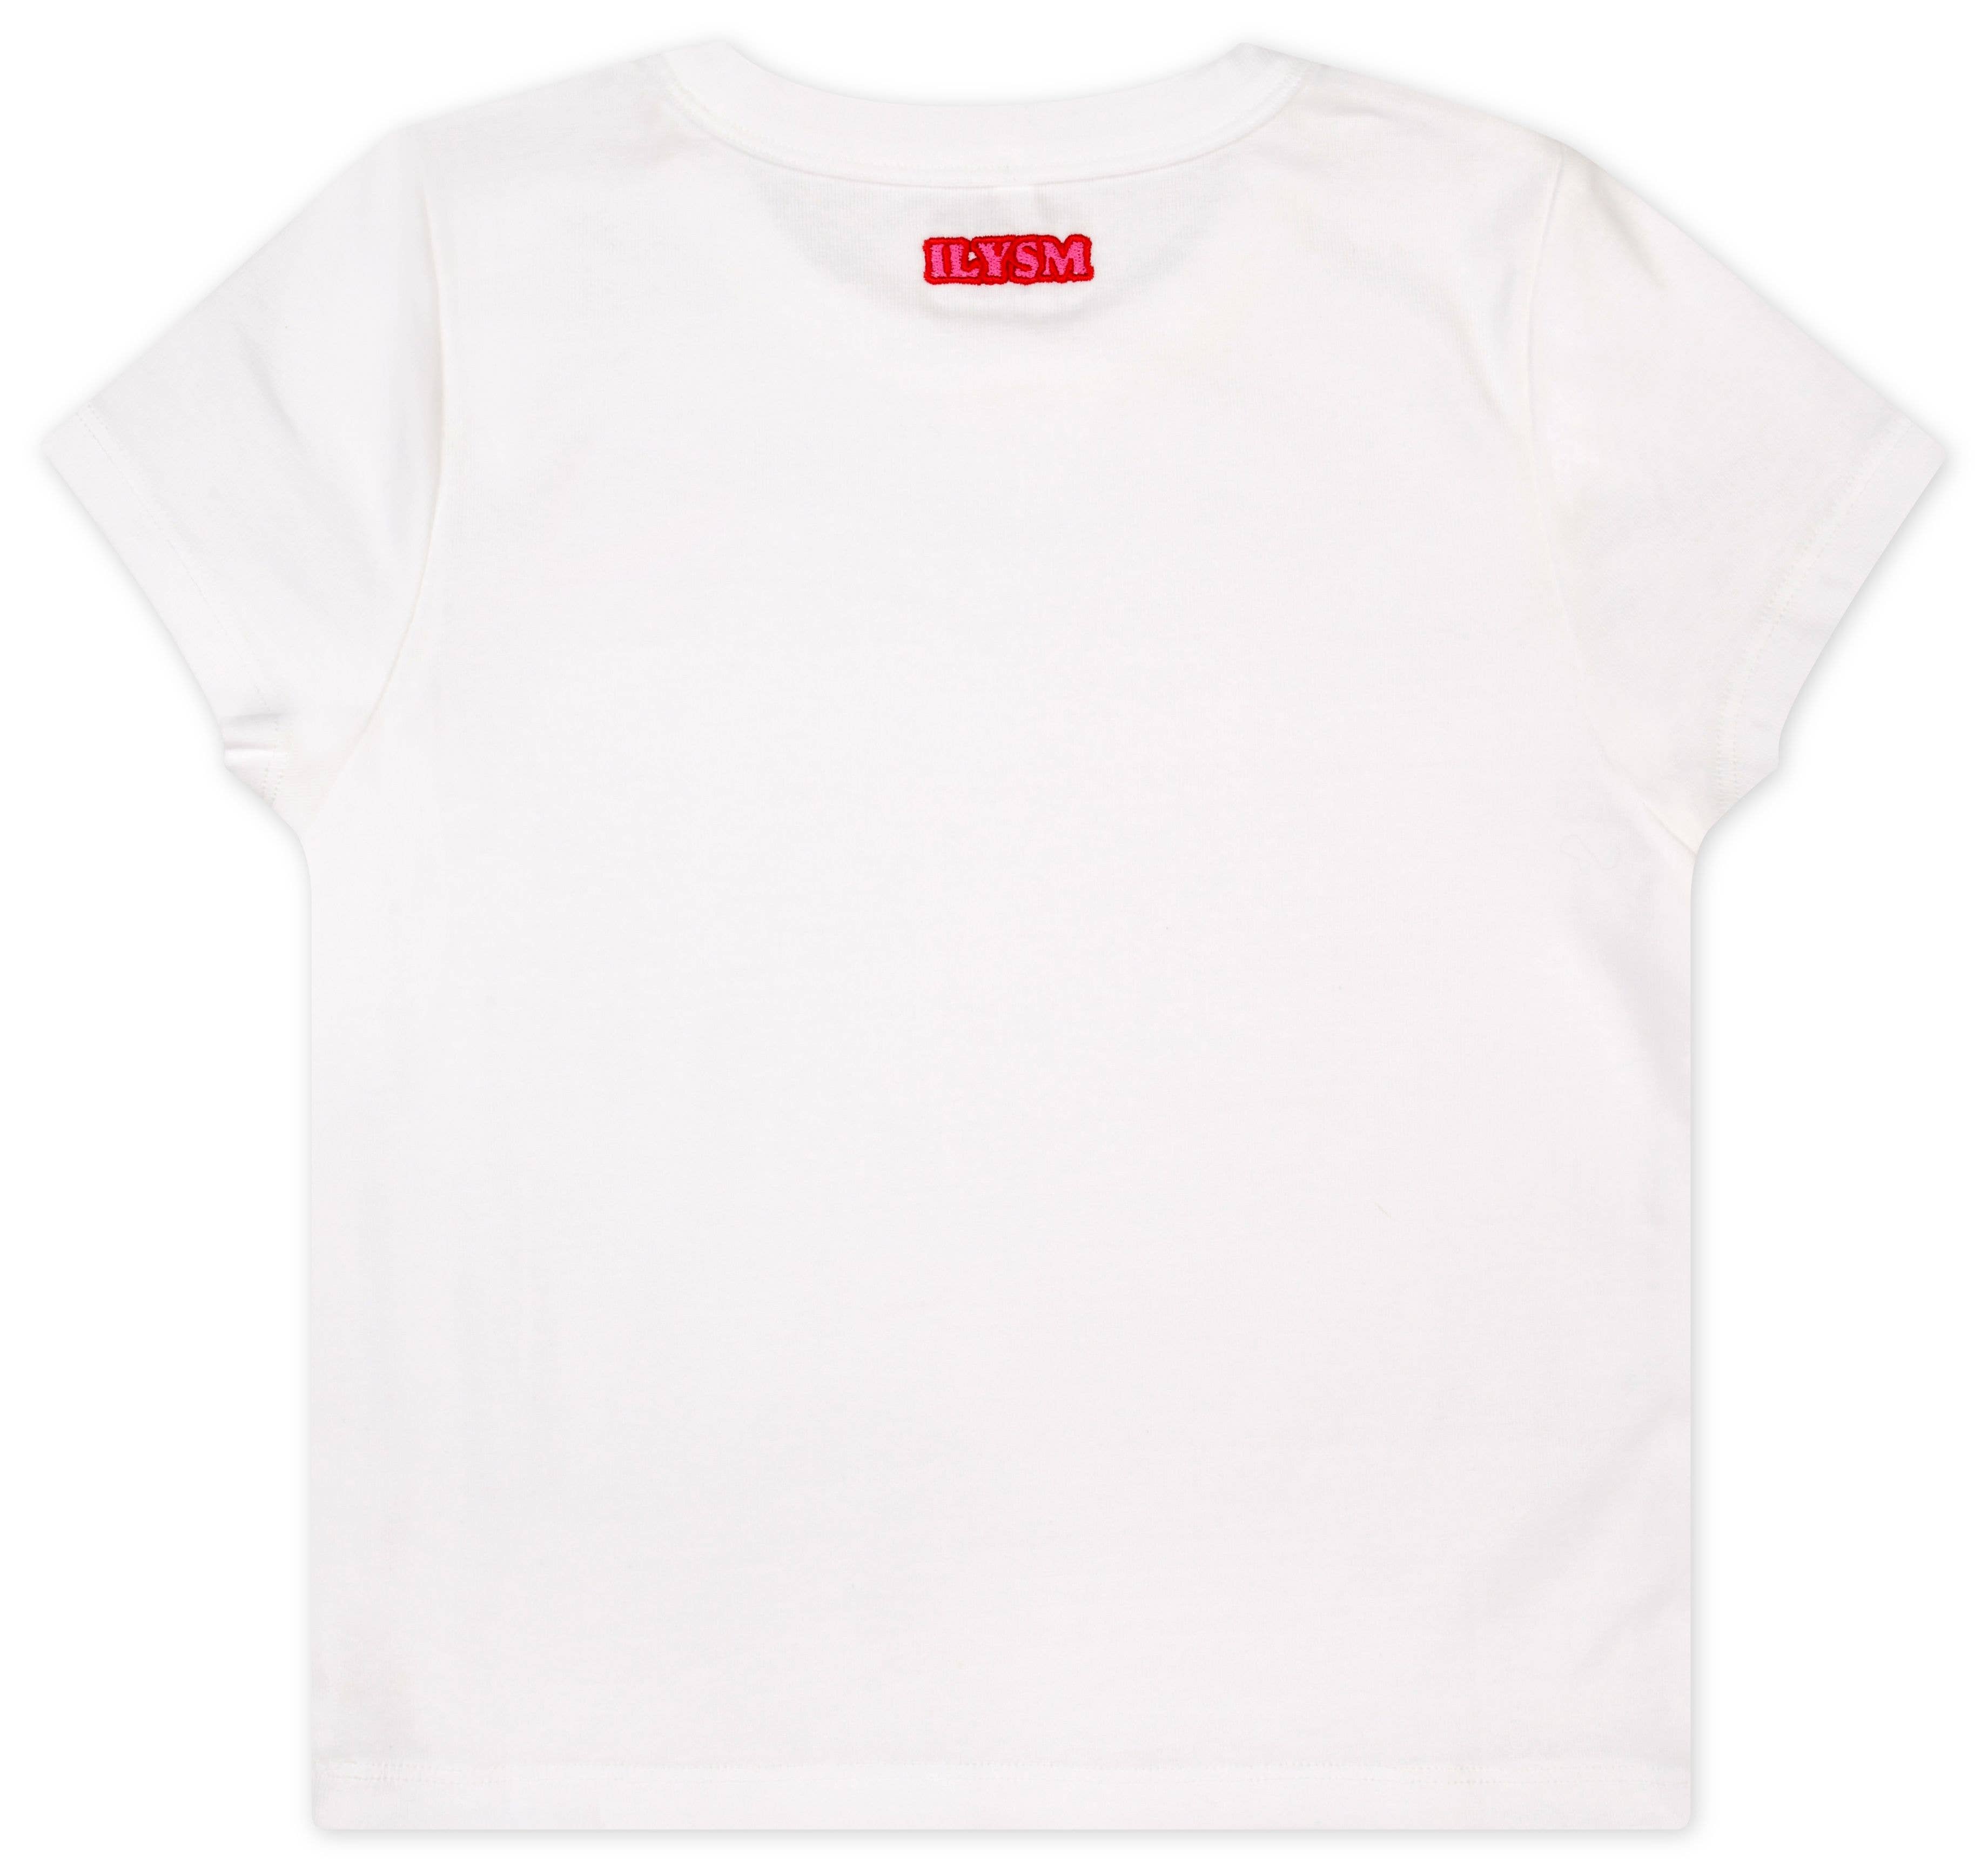 White ILYSM T-Shirt